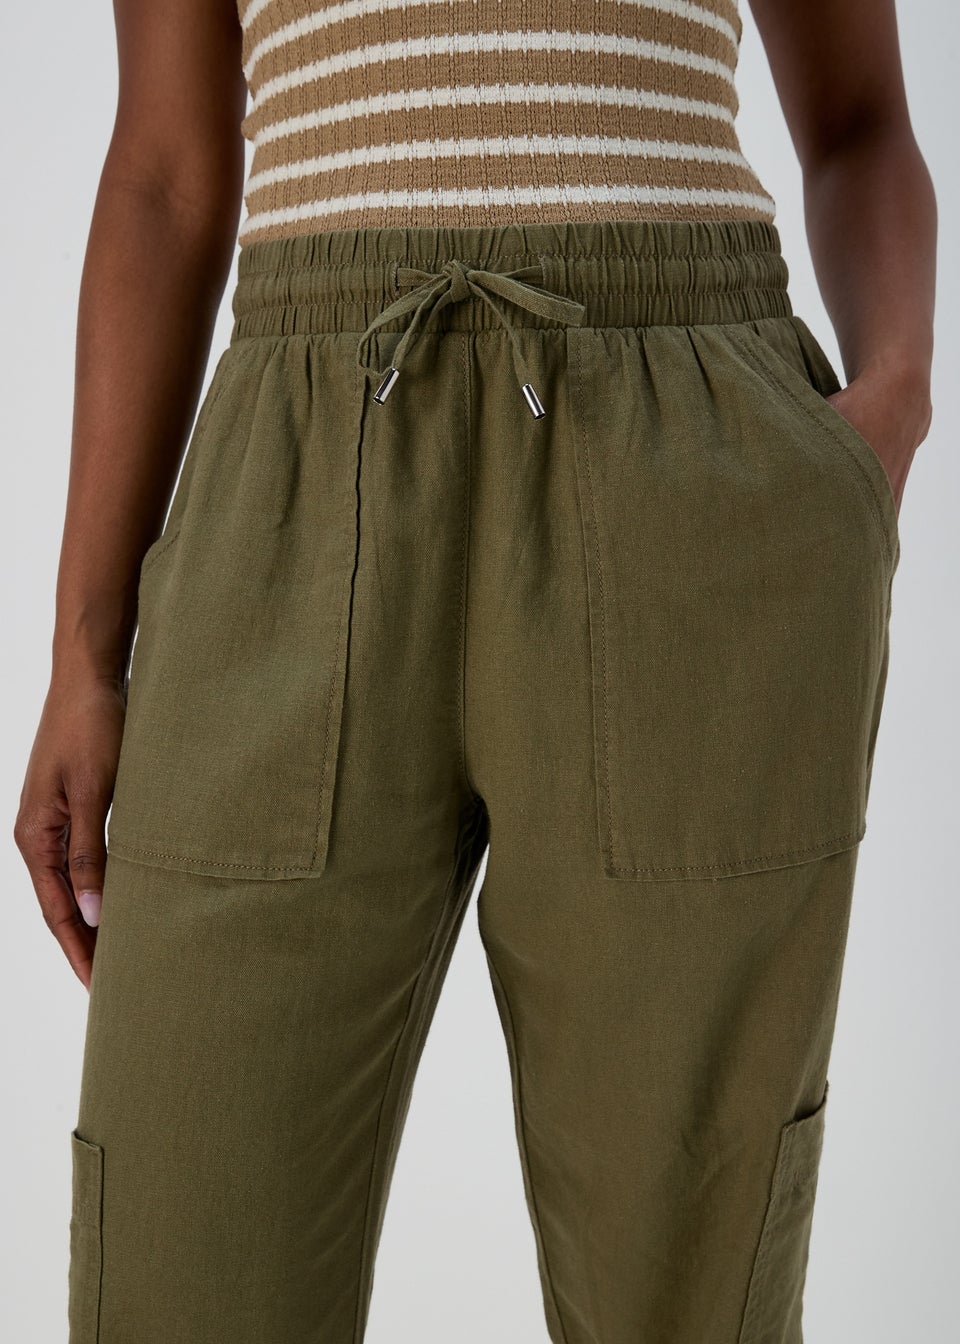 Khaki Linen Cargo Trousers